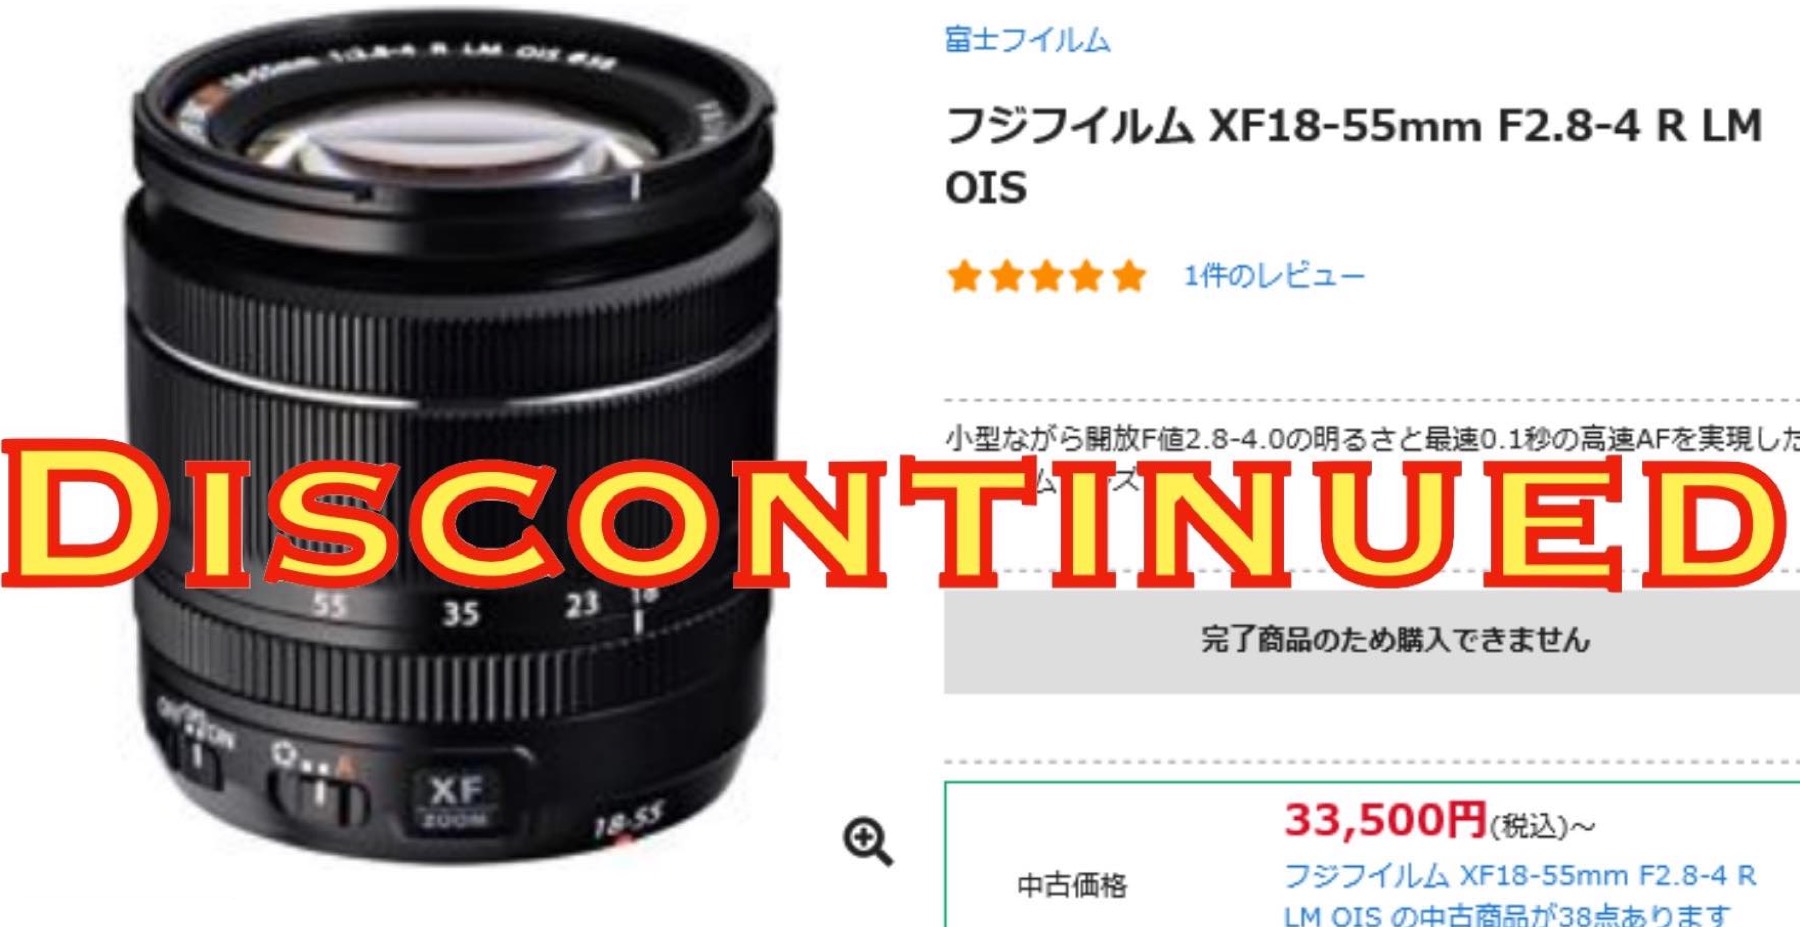 Fujifilm Discontinues Legendary Fujinon XF 18-55mm f/2.8-4 Lens ...